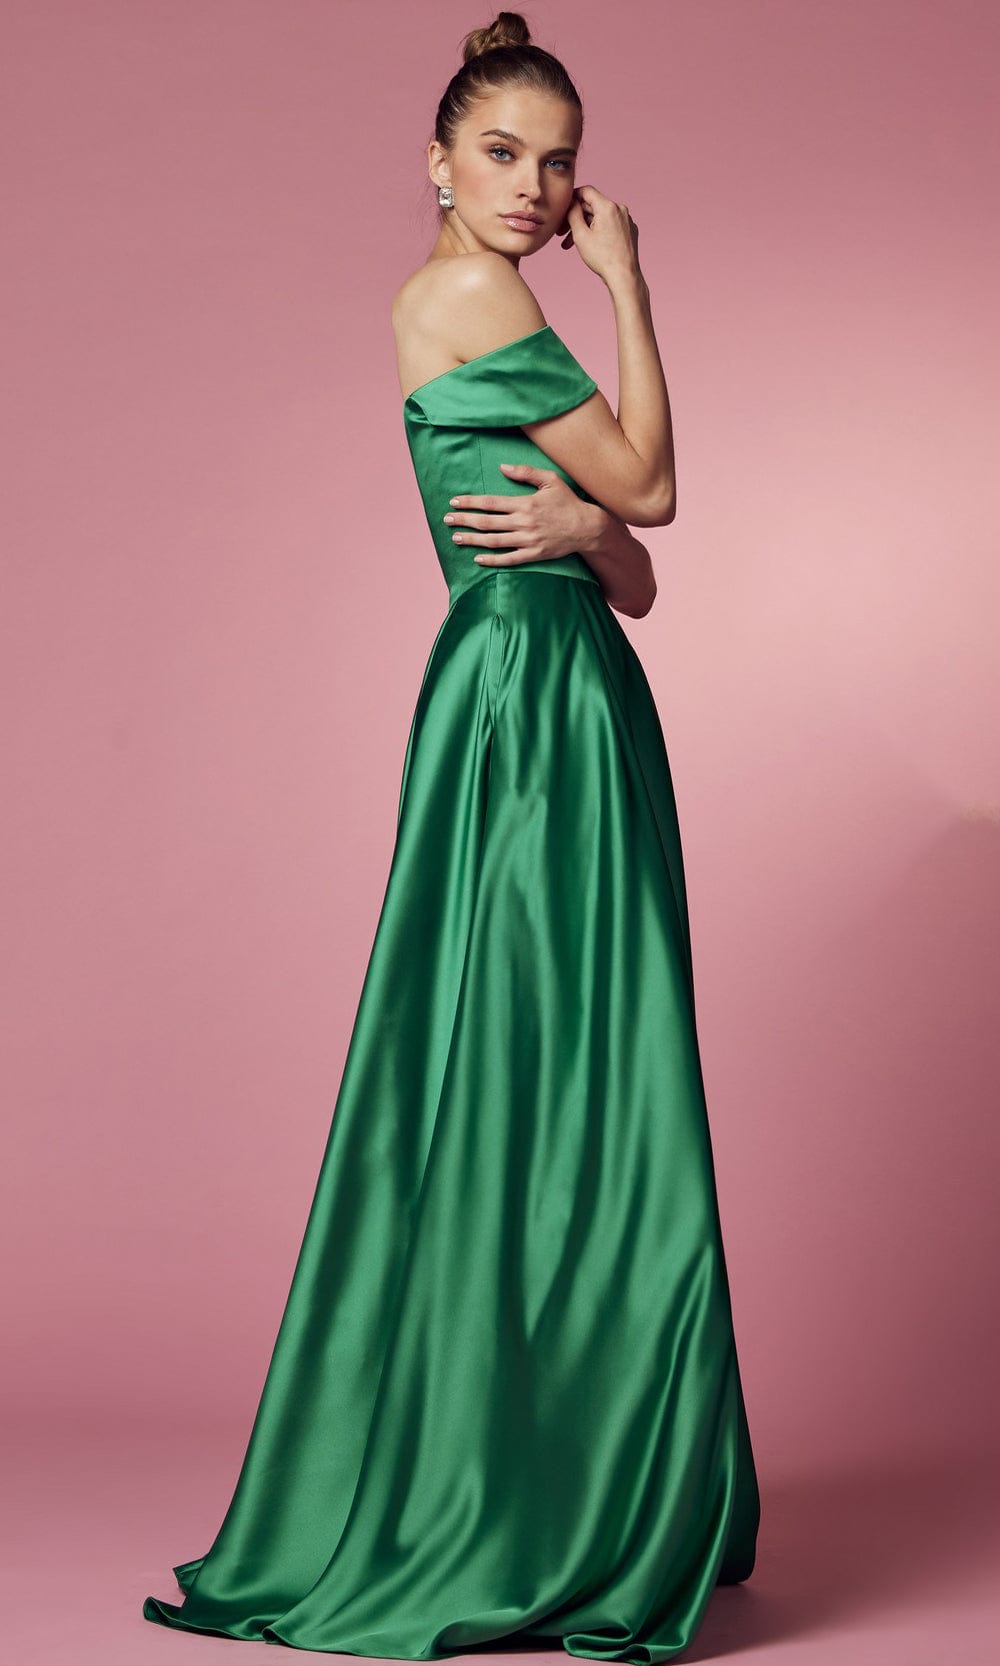 Nox Anabel R1032 - Off Shoulder A-Line Prom Dress Prom Dresses